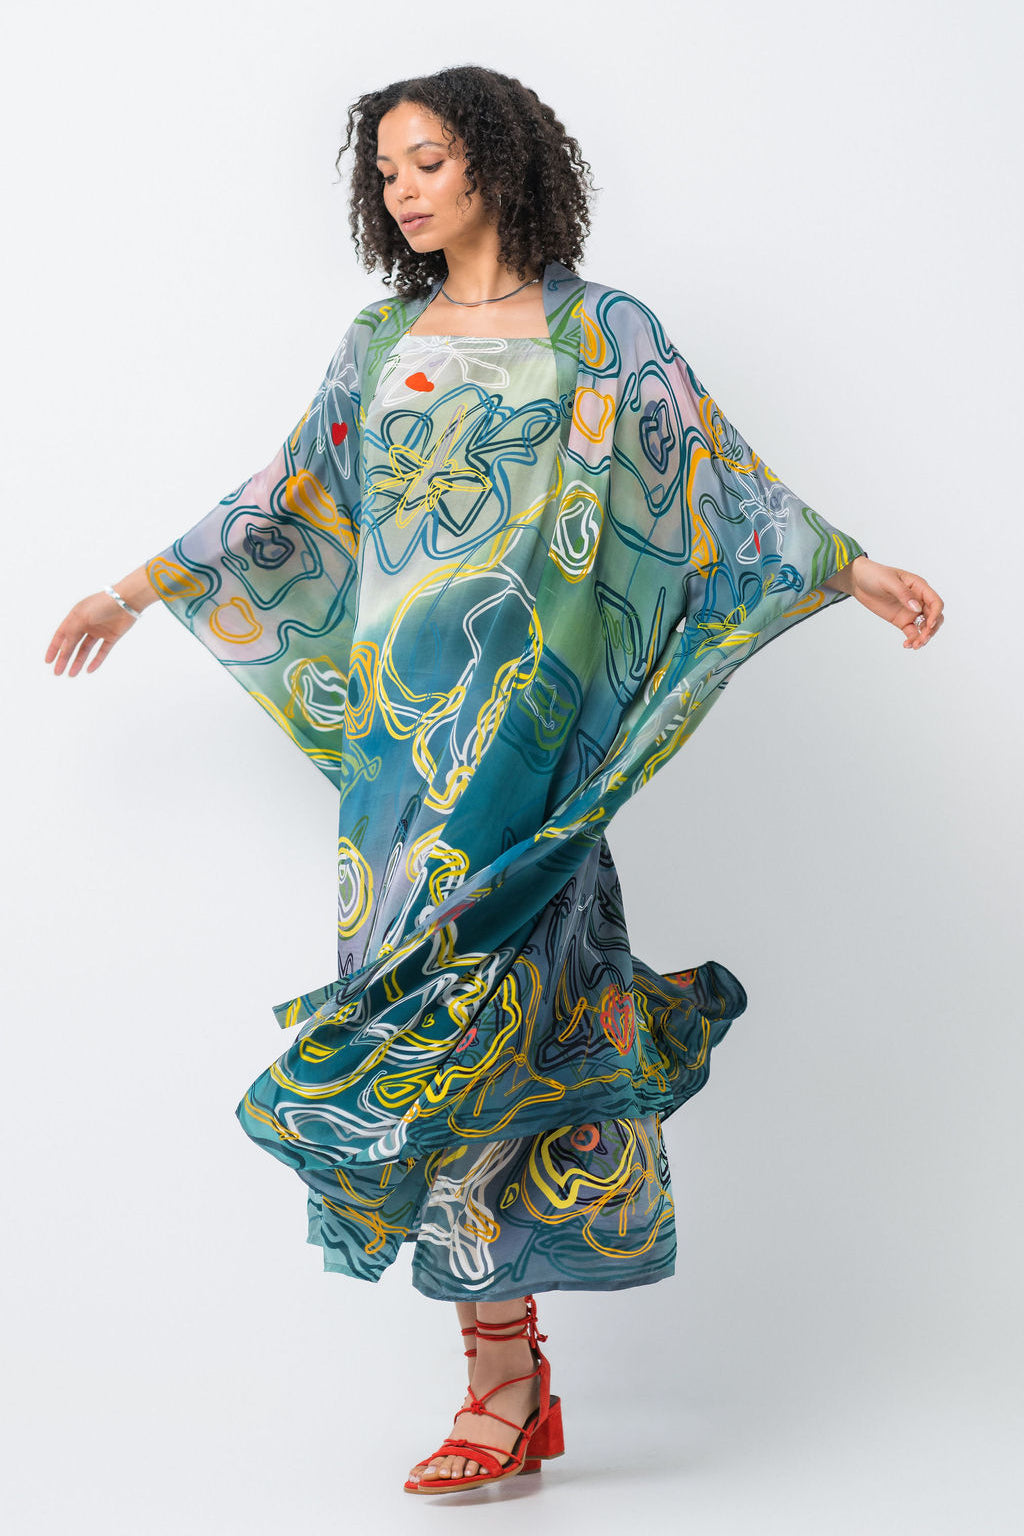 Claire Sower - Luxury Bespoke Fashion - Contessa Kimono